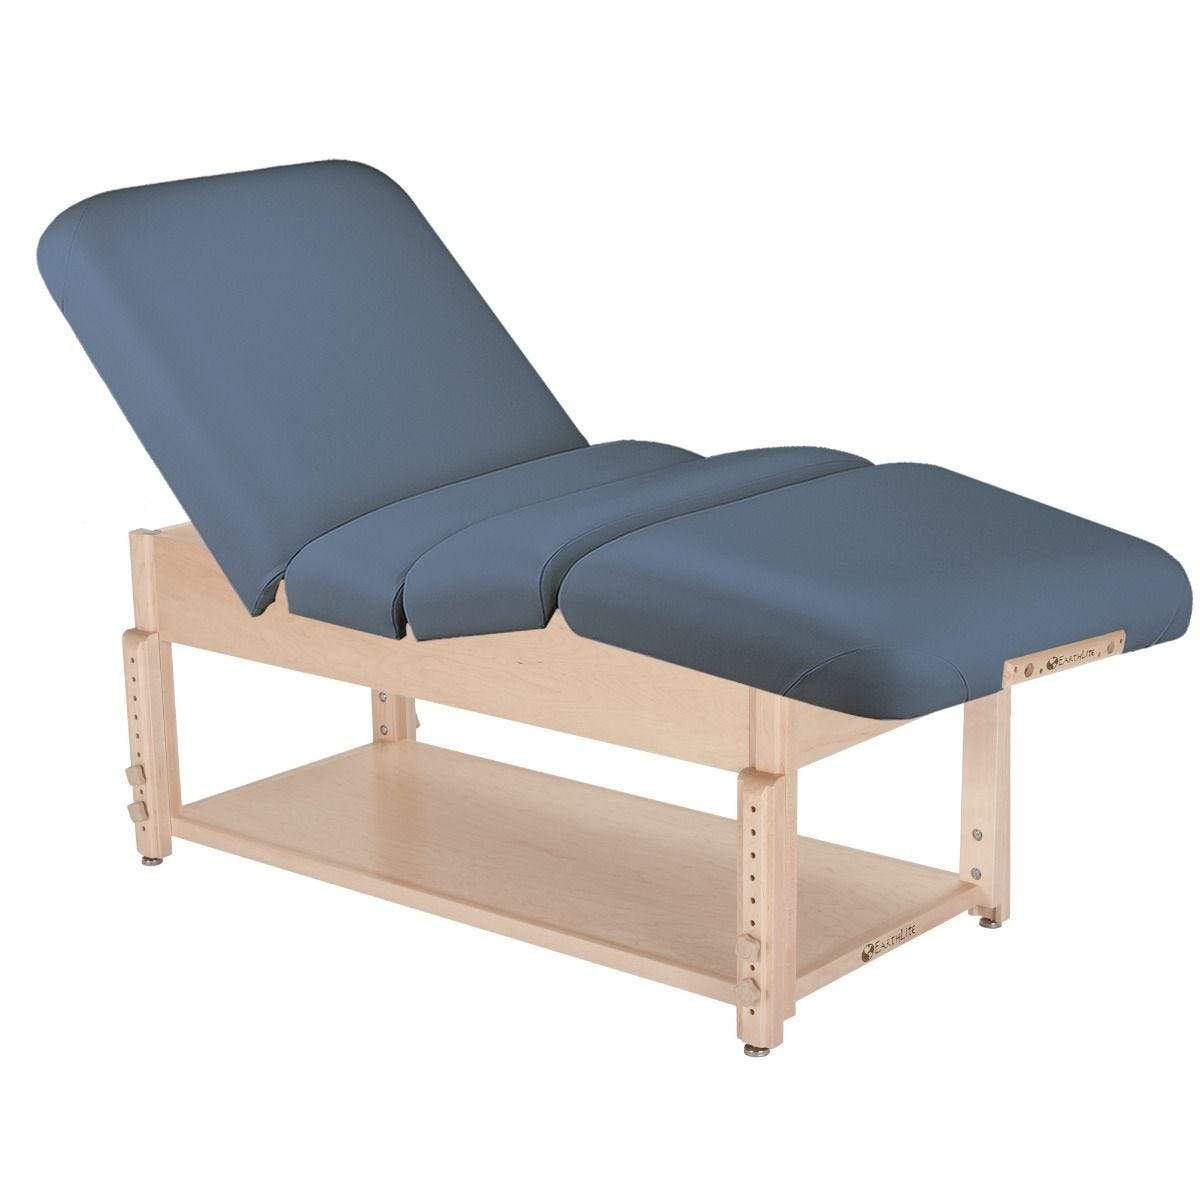 Earthlite Sedona Pneumatic Salon Stationary Spa & Massage Table